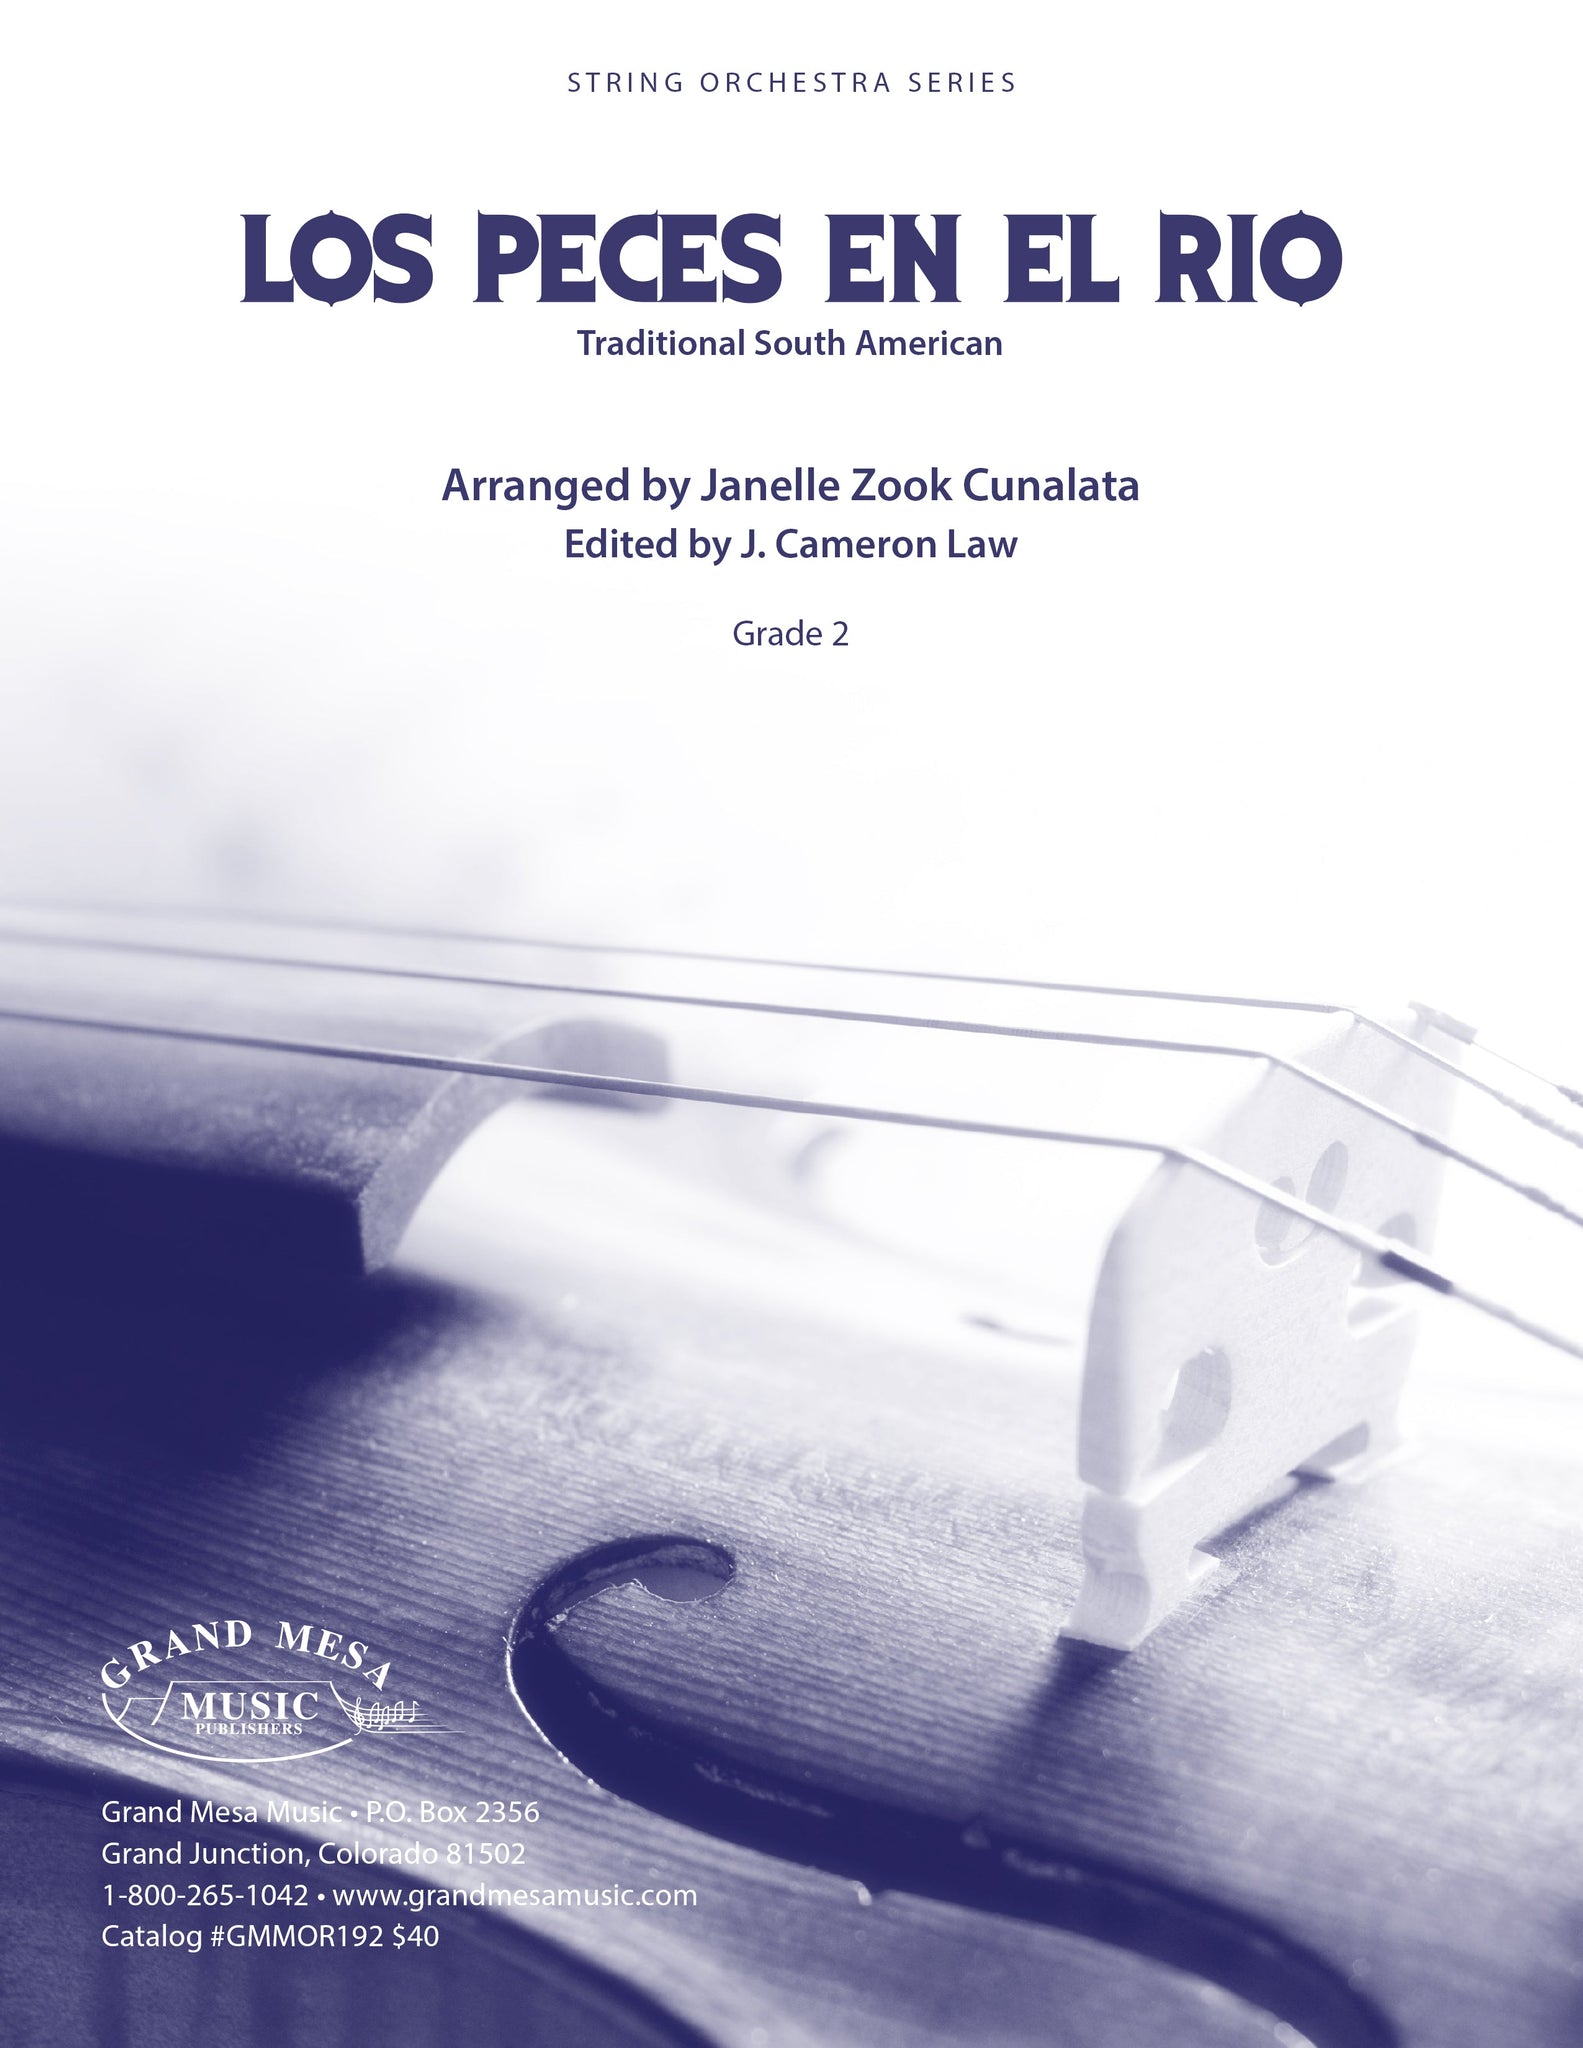 Strings sheet music cover of Los Peces en el Rio, arranged by Janelle Zook Cunalata.